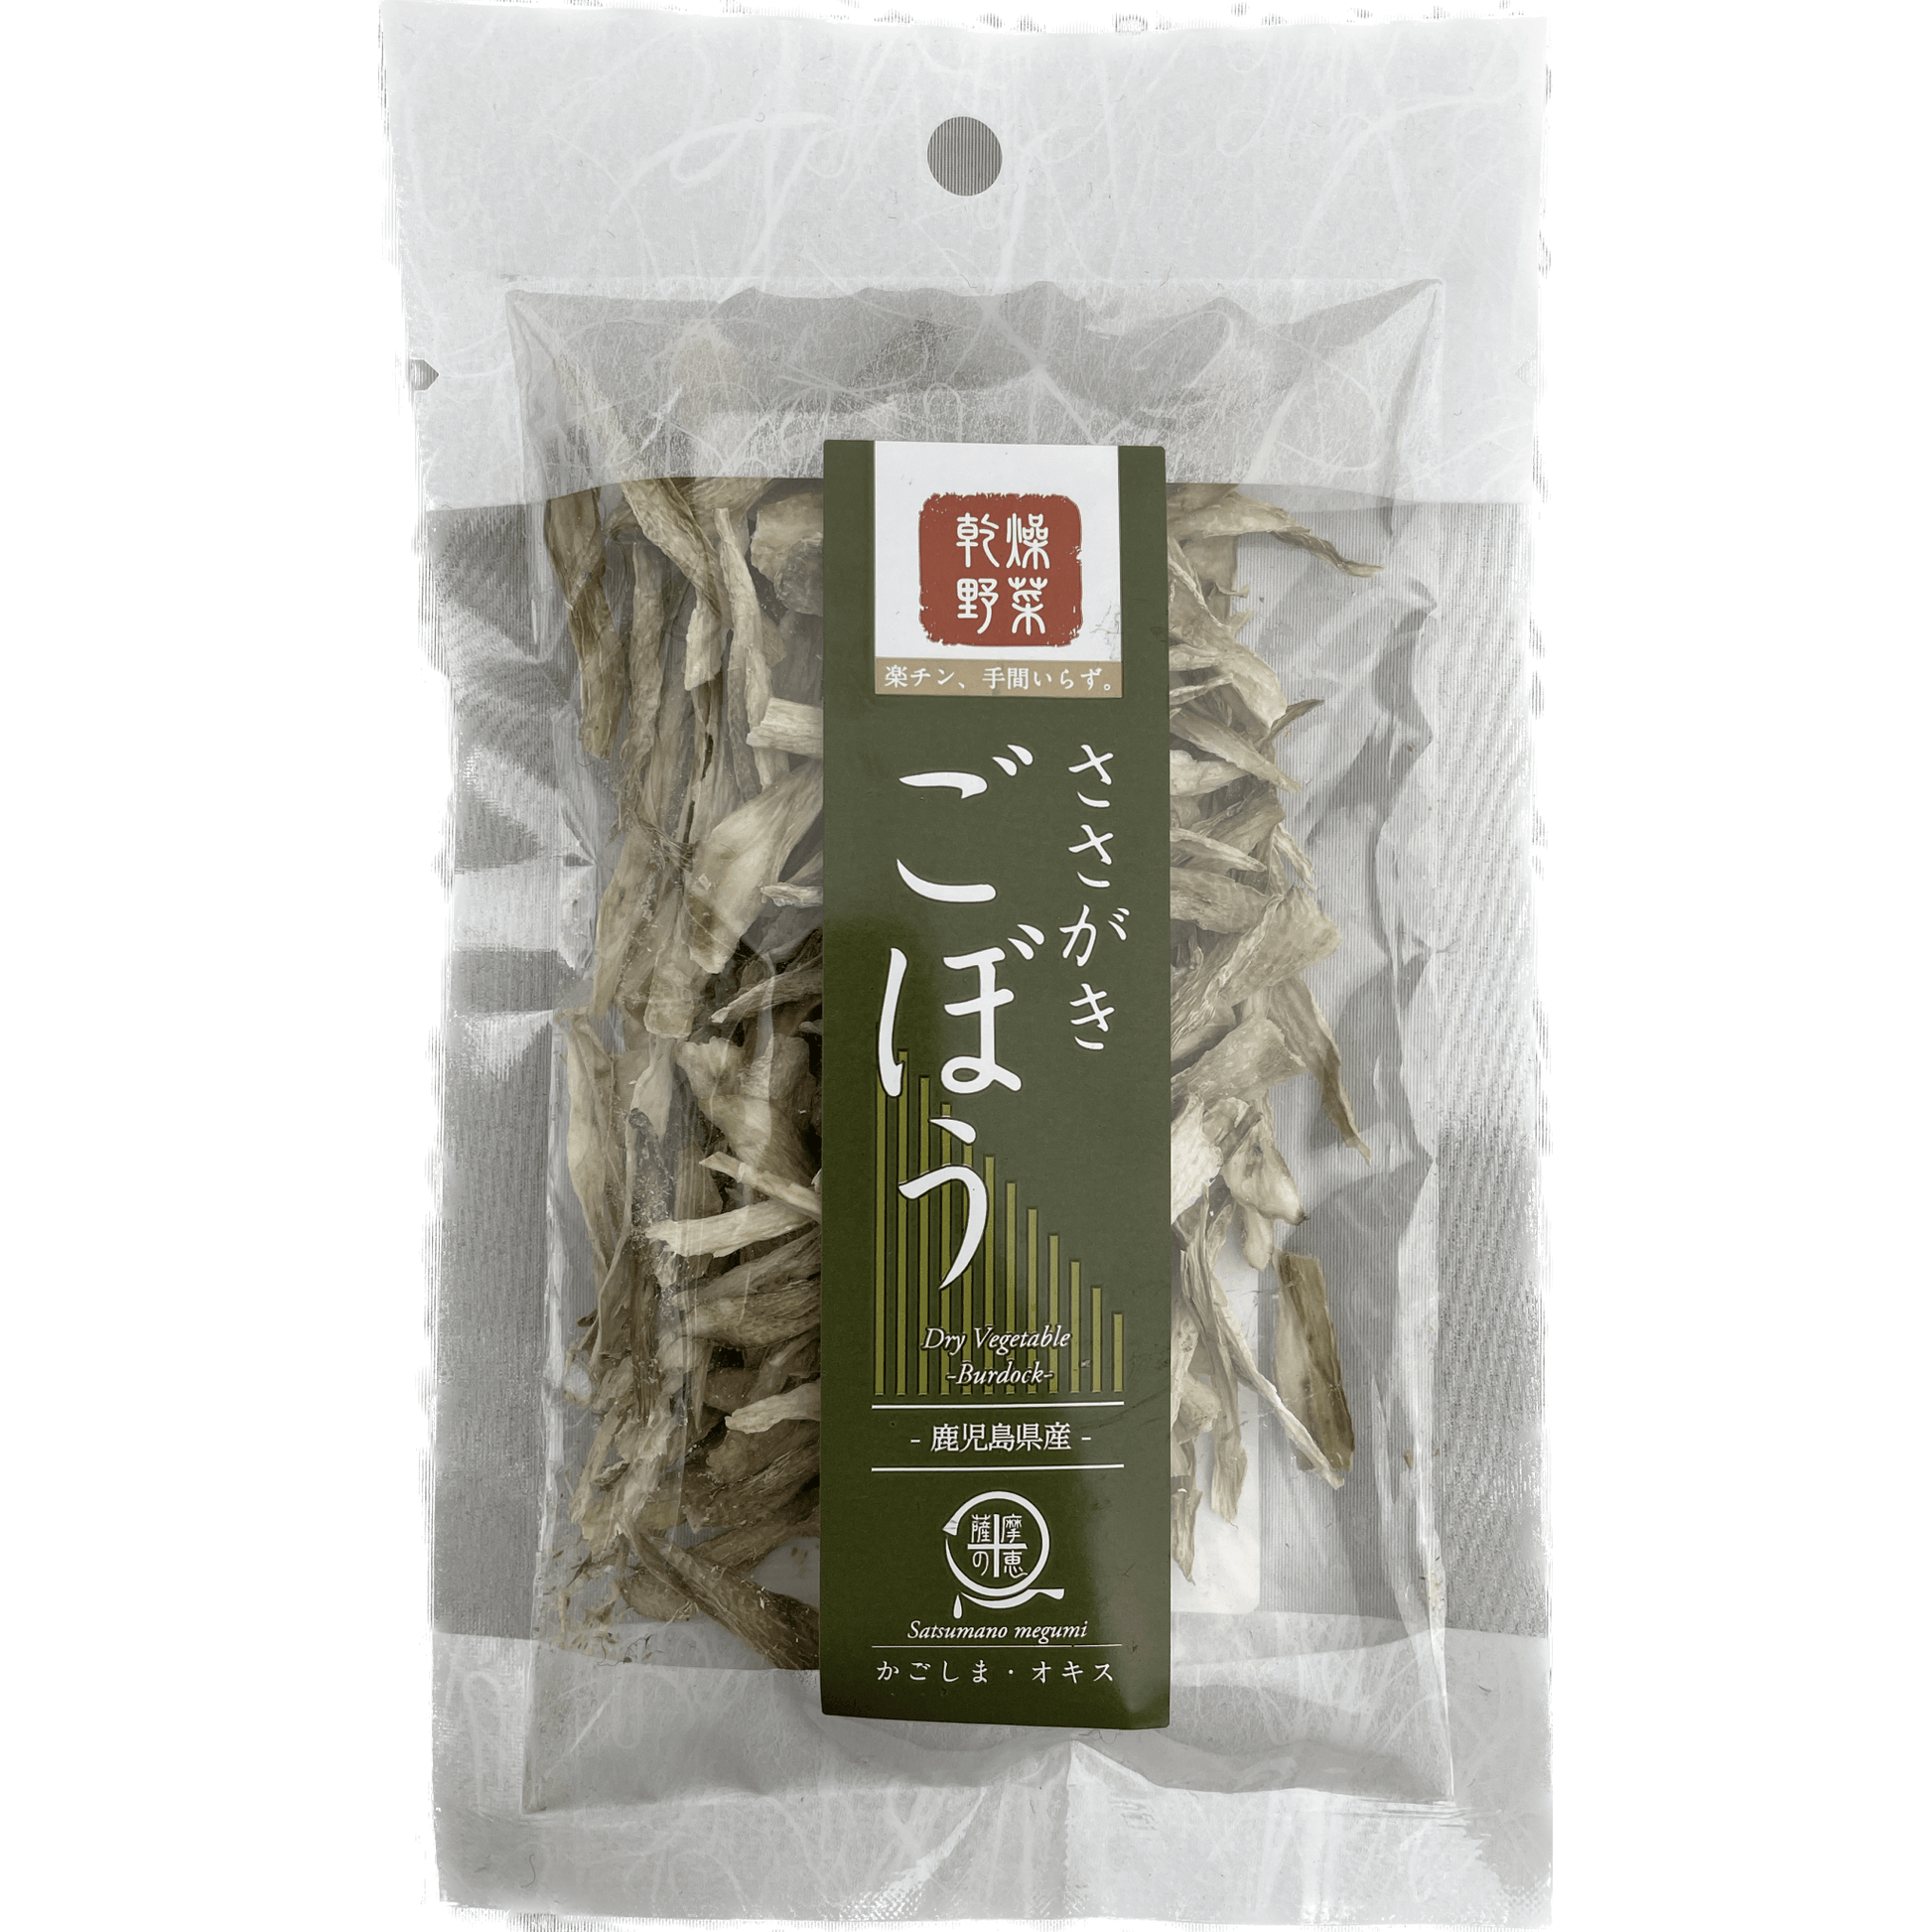 Okisu Satsumano Megumi Dry Vegetable Burdock 15g / オキス 薩摩の恵 乾燥野菜 ささがきごぼう 15g - RiceWineShop